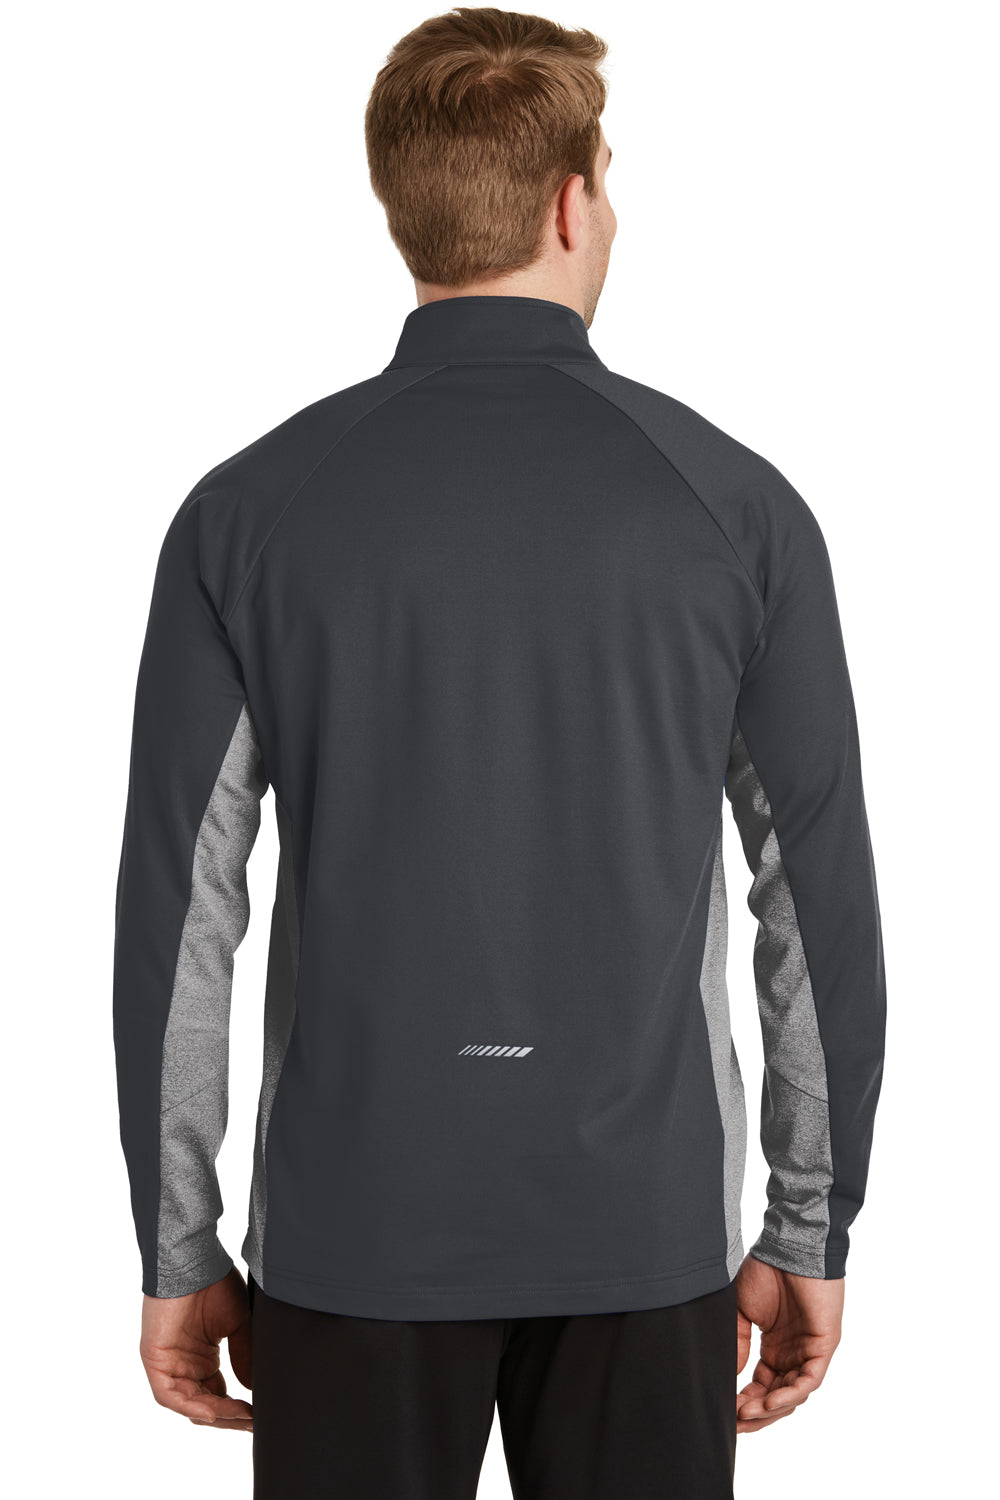 Sport-Tek ST854 Mens Sport-Wick Moisture Wicking 1/4 Zip Sweatshirt Charcoal Grey/Heather Charcoal Grey Back